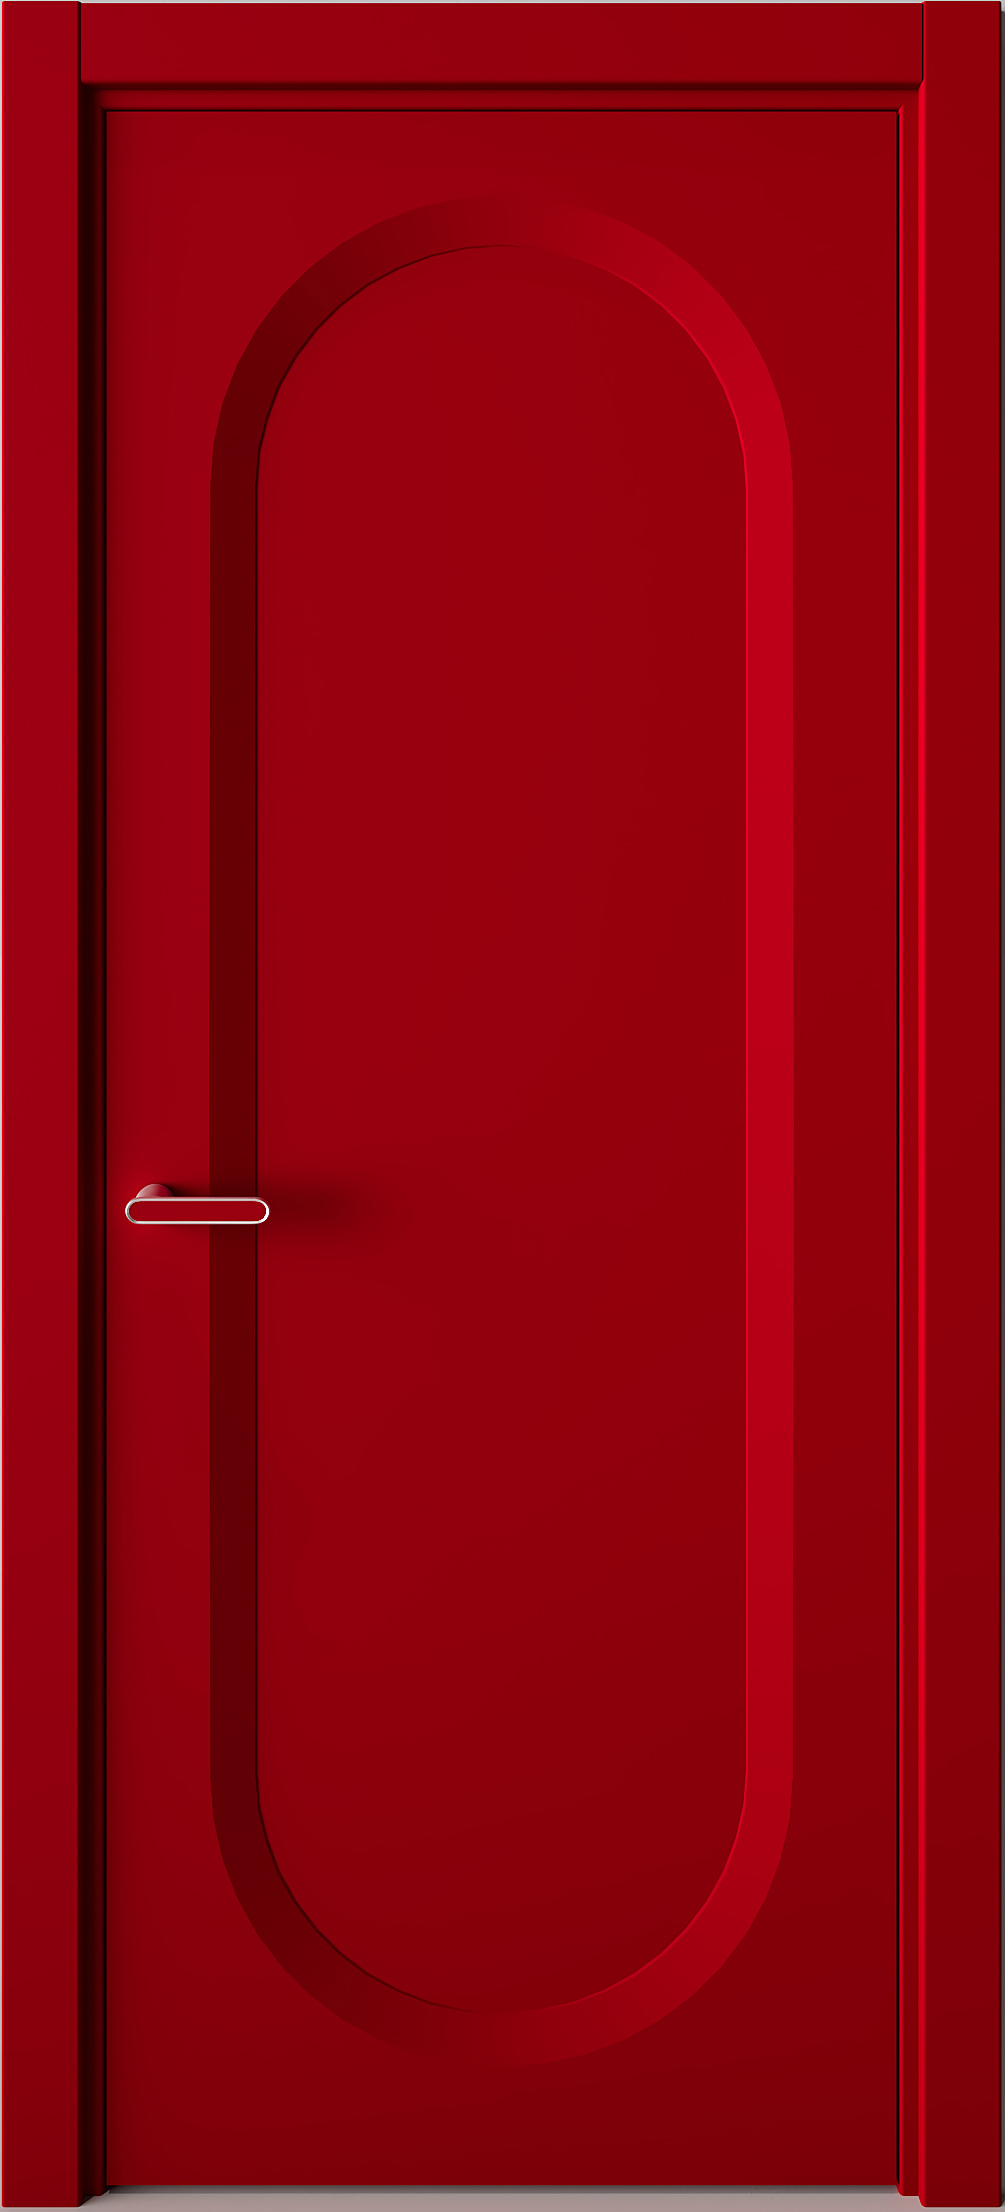 Межкомнатная дверь Солярис 175:КВ0 RAL